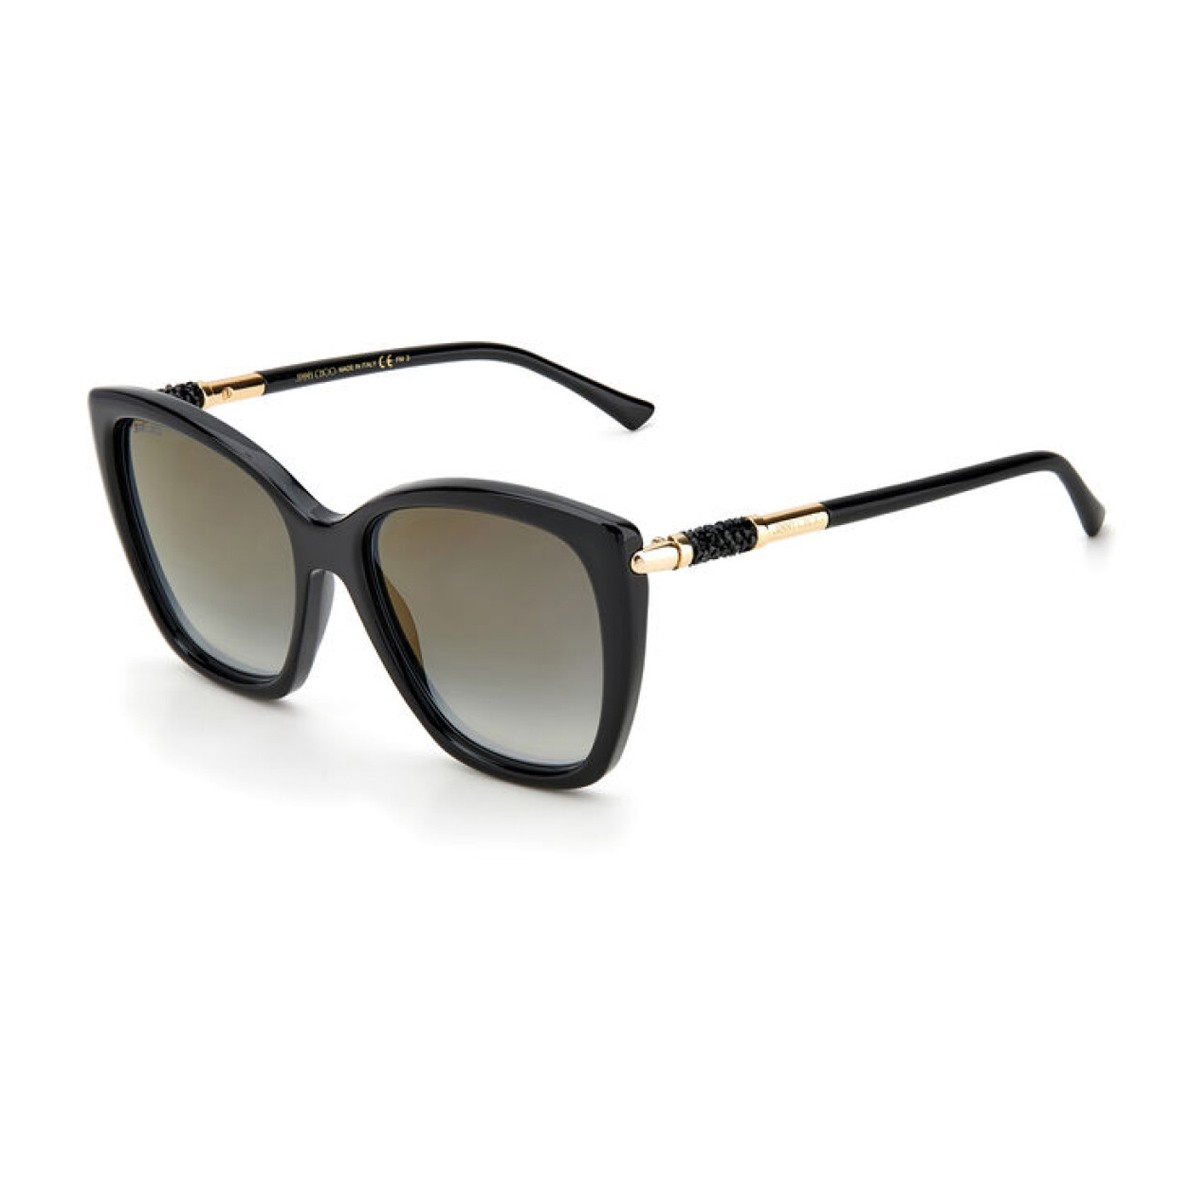 Discover 73+ cheap jimmy choo sunglasses best